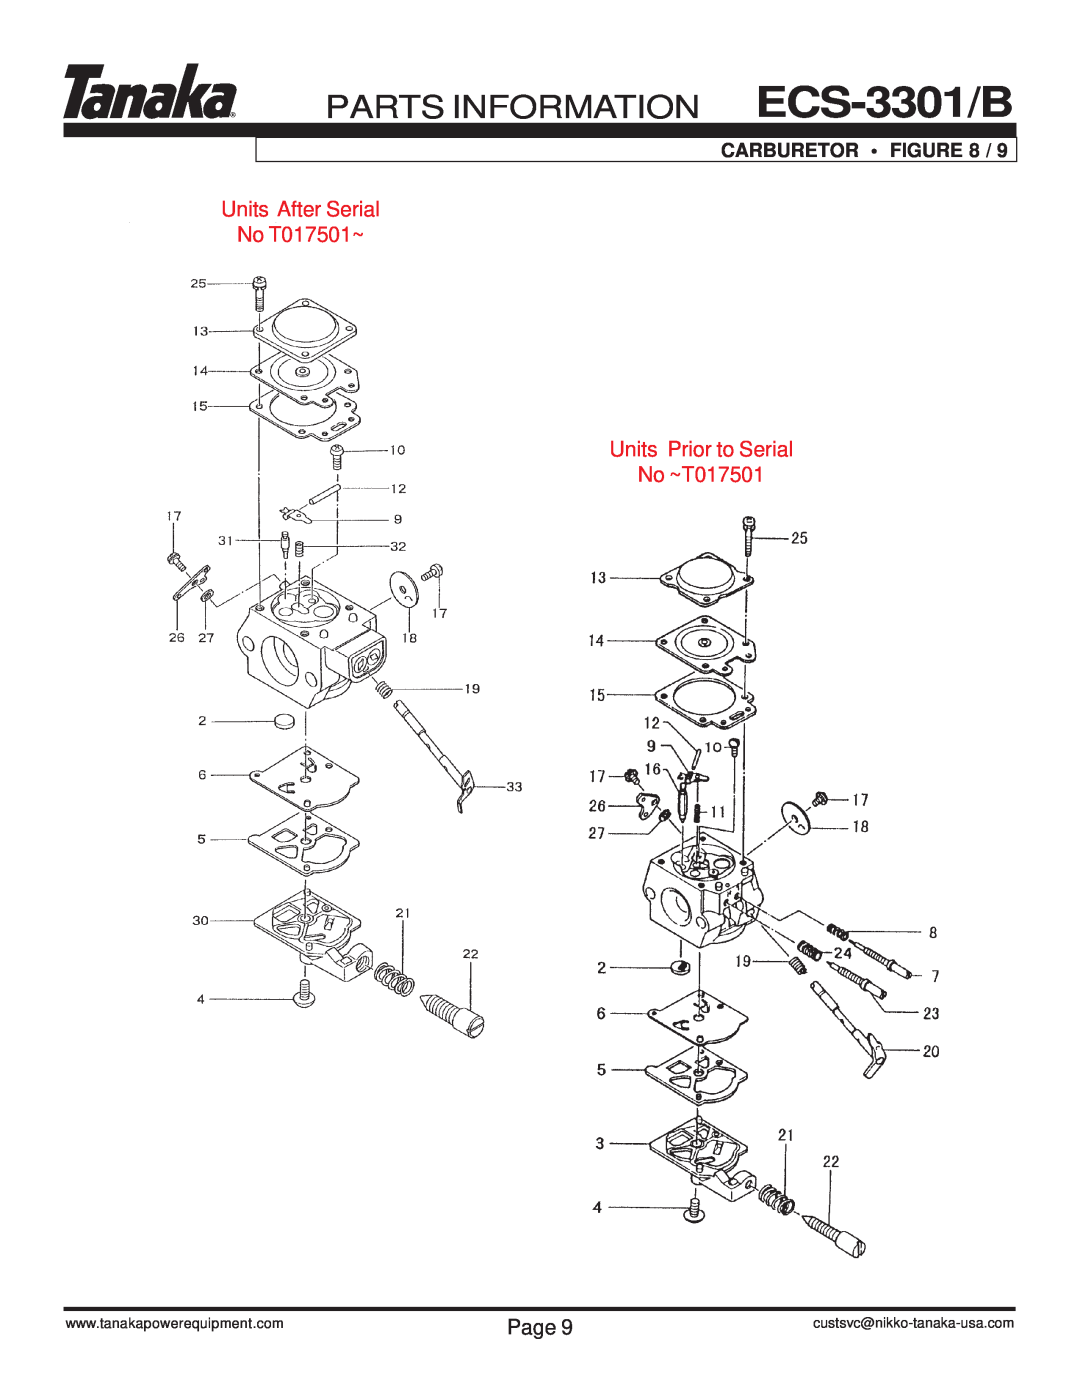 Tanaka ECS-3301/B manual Units After Serial No T017501~, Units Prior to Serial No ~T017501, Carburetor Figure, Page 